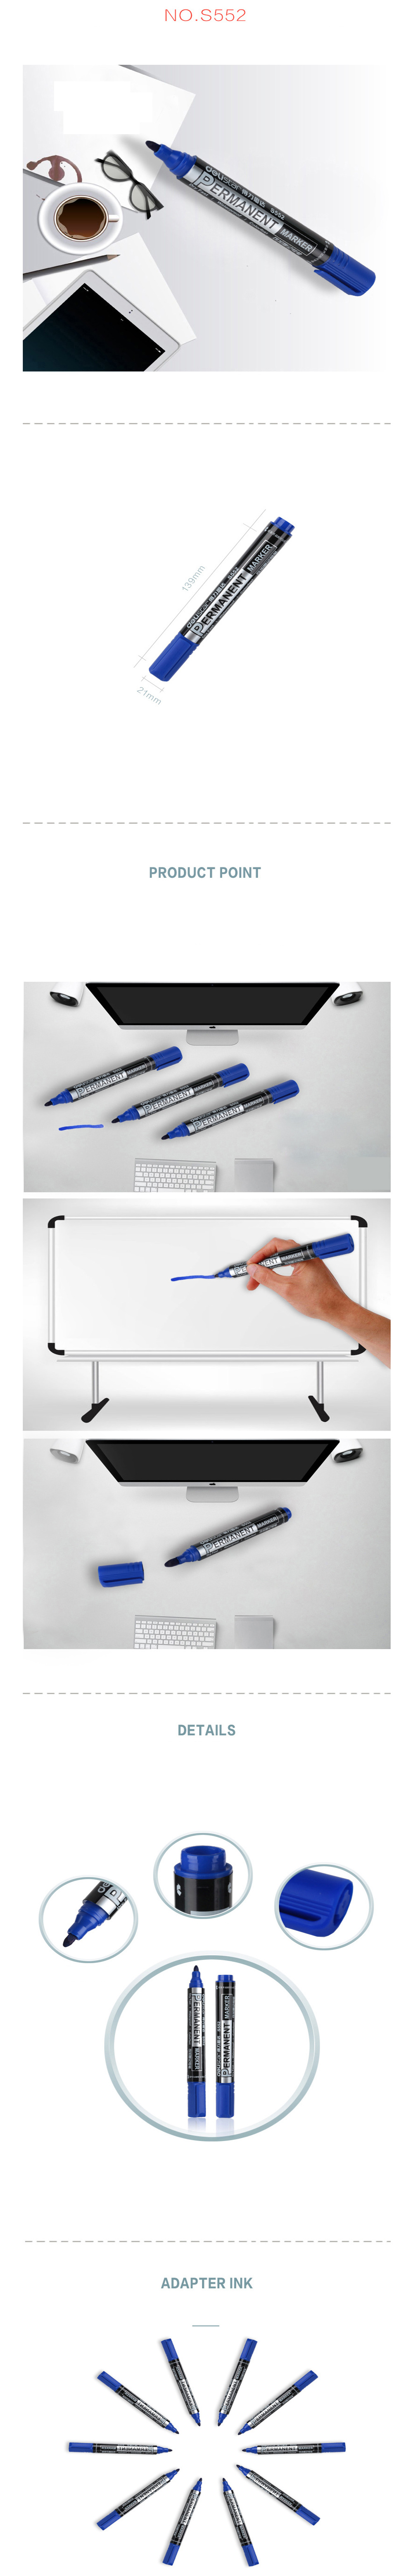 Deli S552 Marker Pen Large Capacity Add Ink Oily Large Head Markers Pen Marking Writing Pen